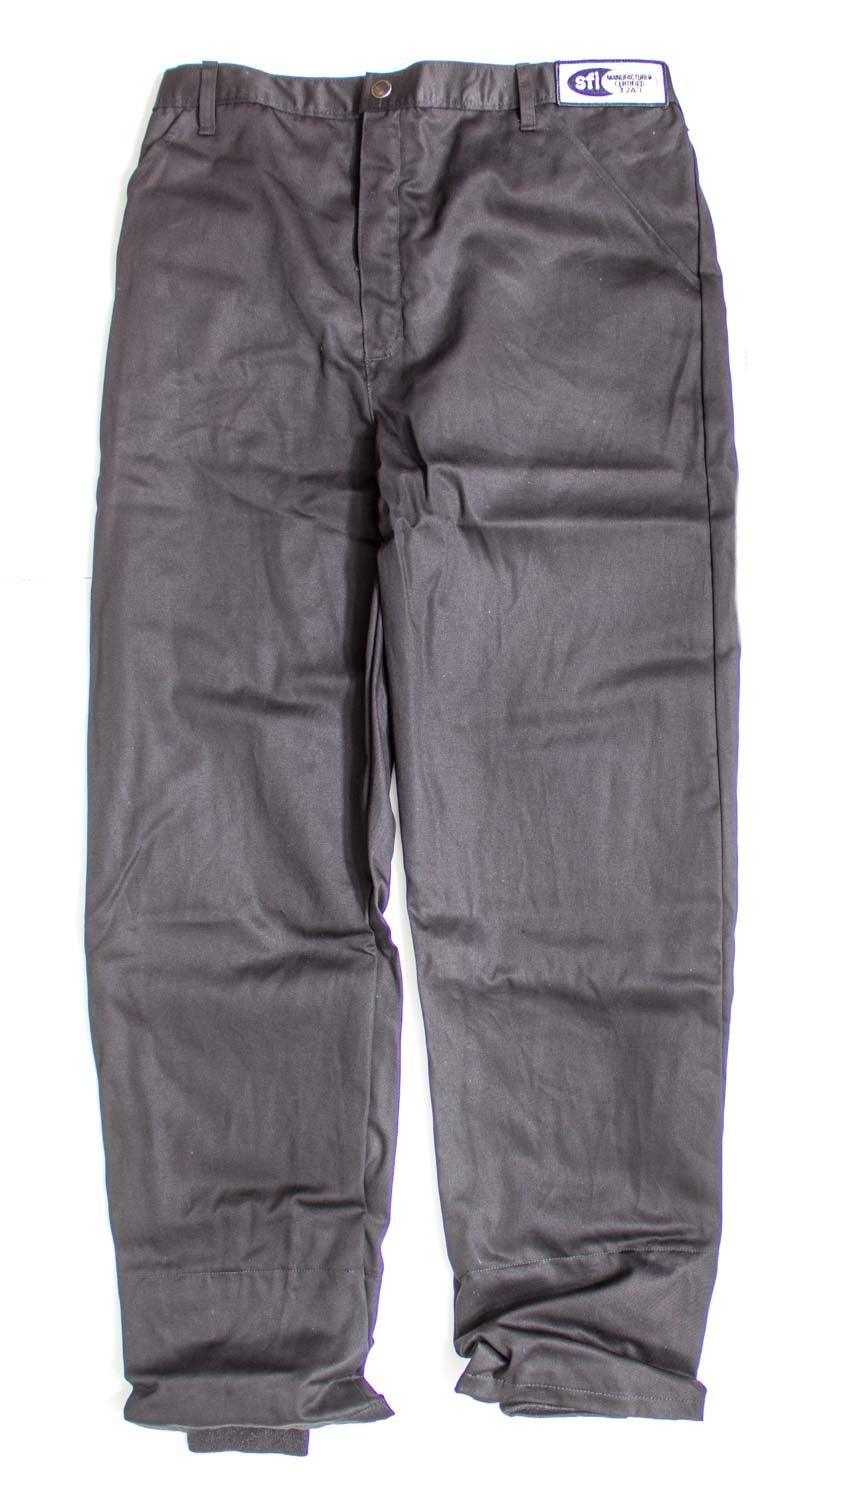 GF125 Pants Only XX-Large Black - Burlile Performance Products